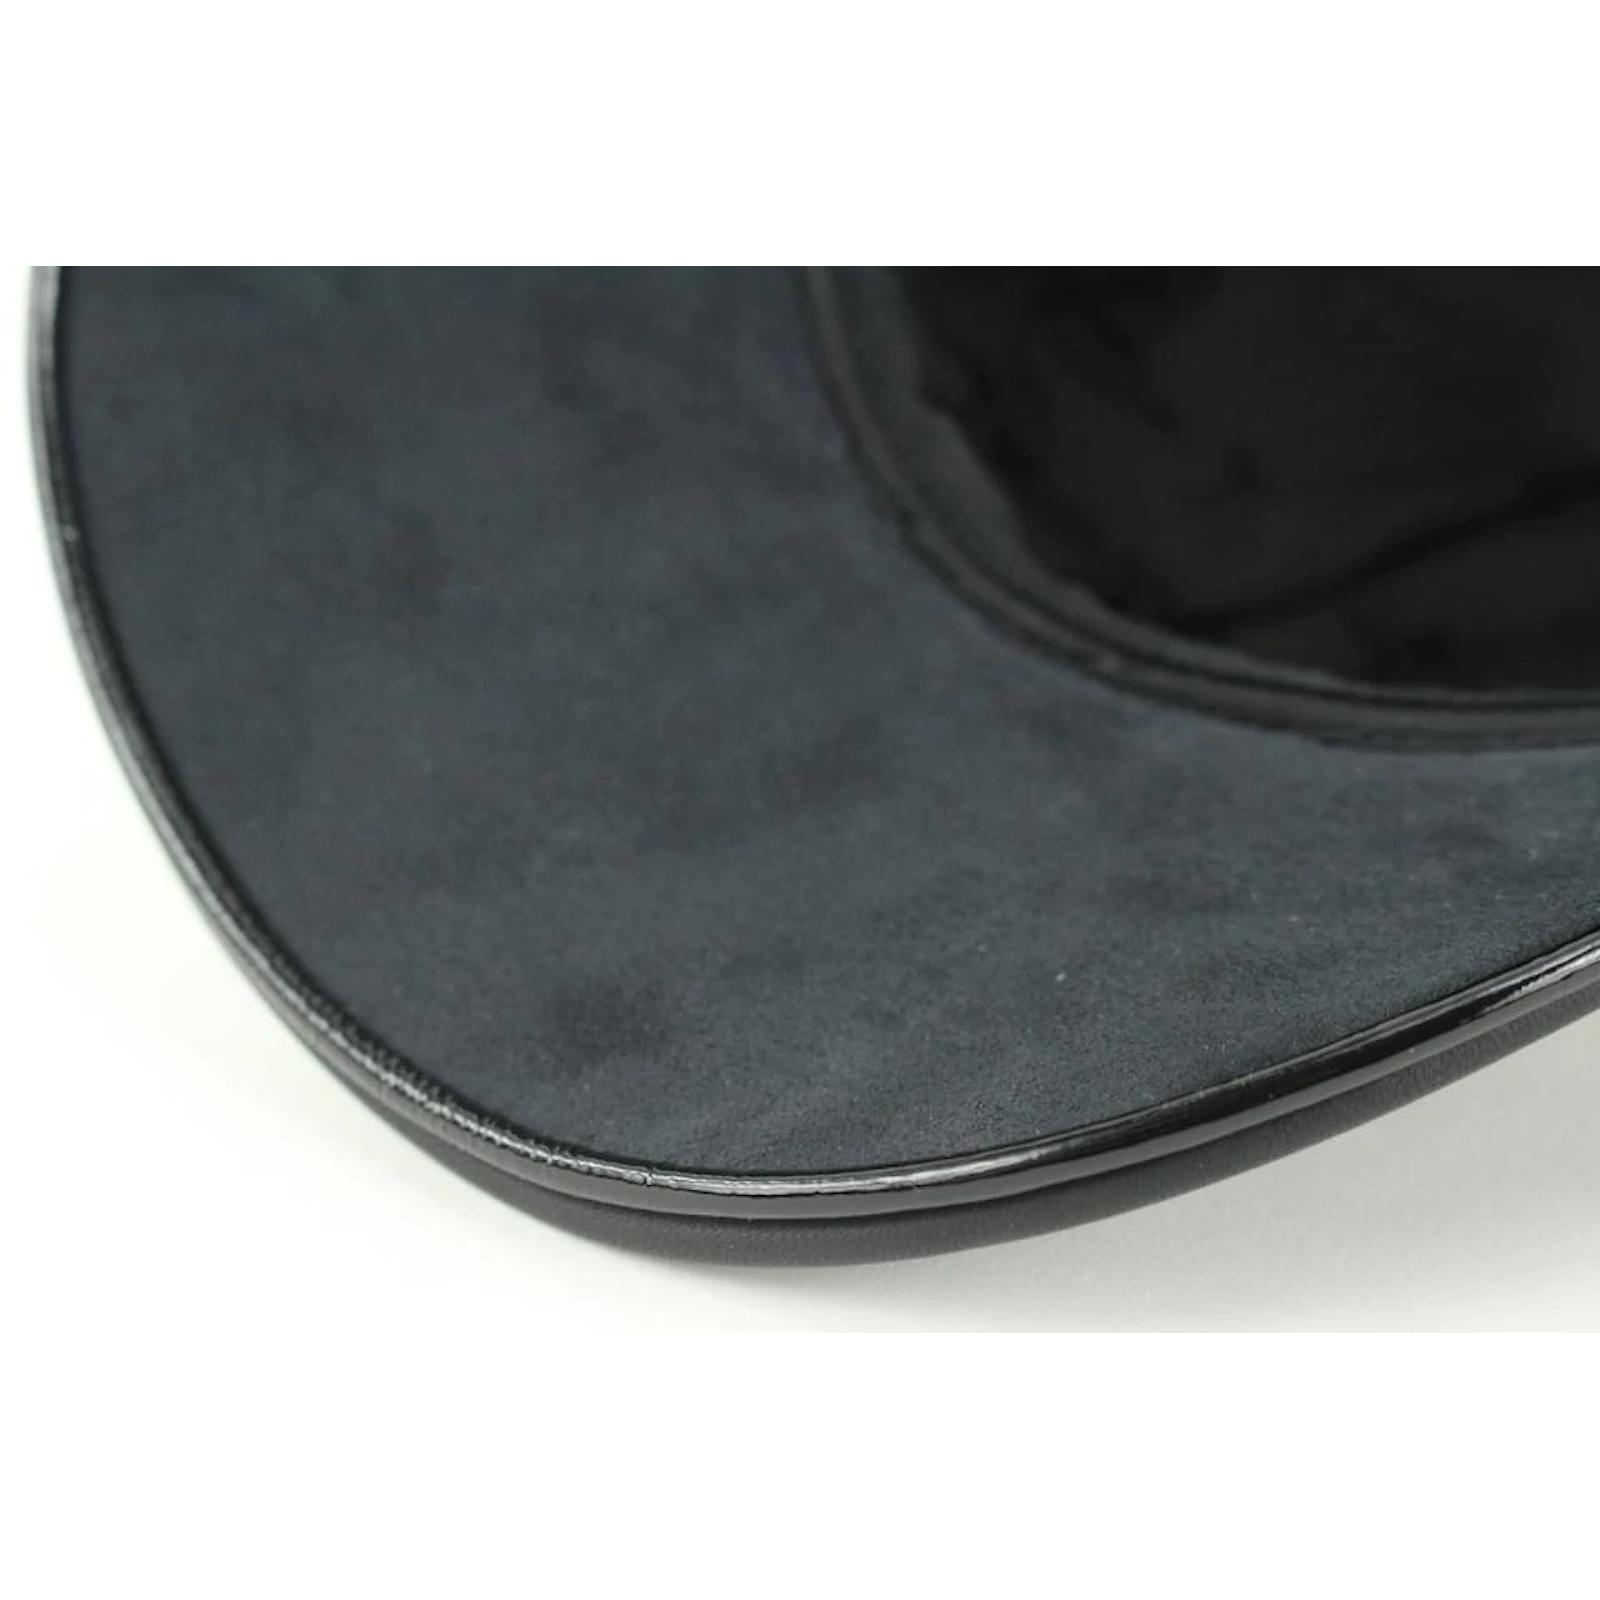 Louis Vuitton Size Medium Black Leather 5 Flower Baseball Cap Hat